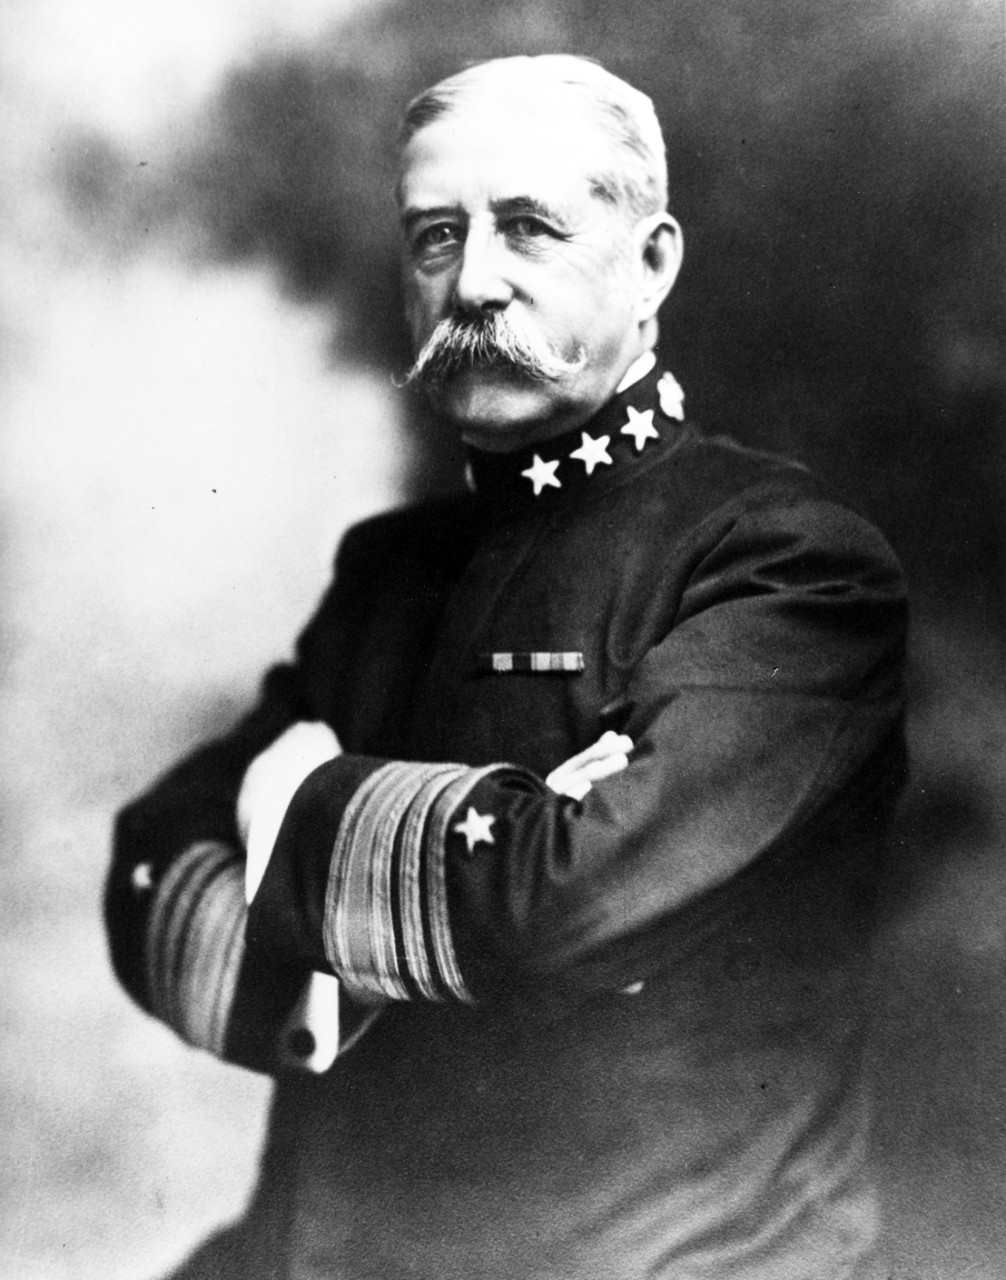 Vice Admiral DeWitt C. Coffman, USN